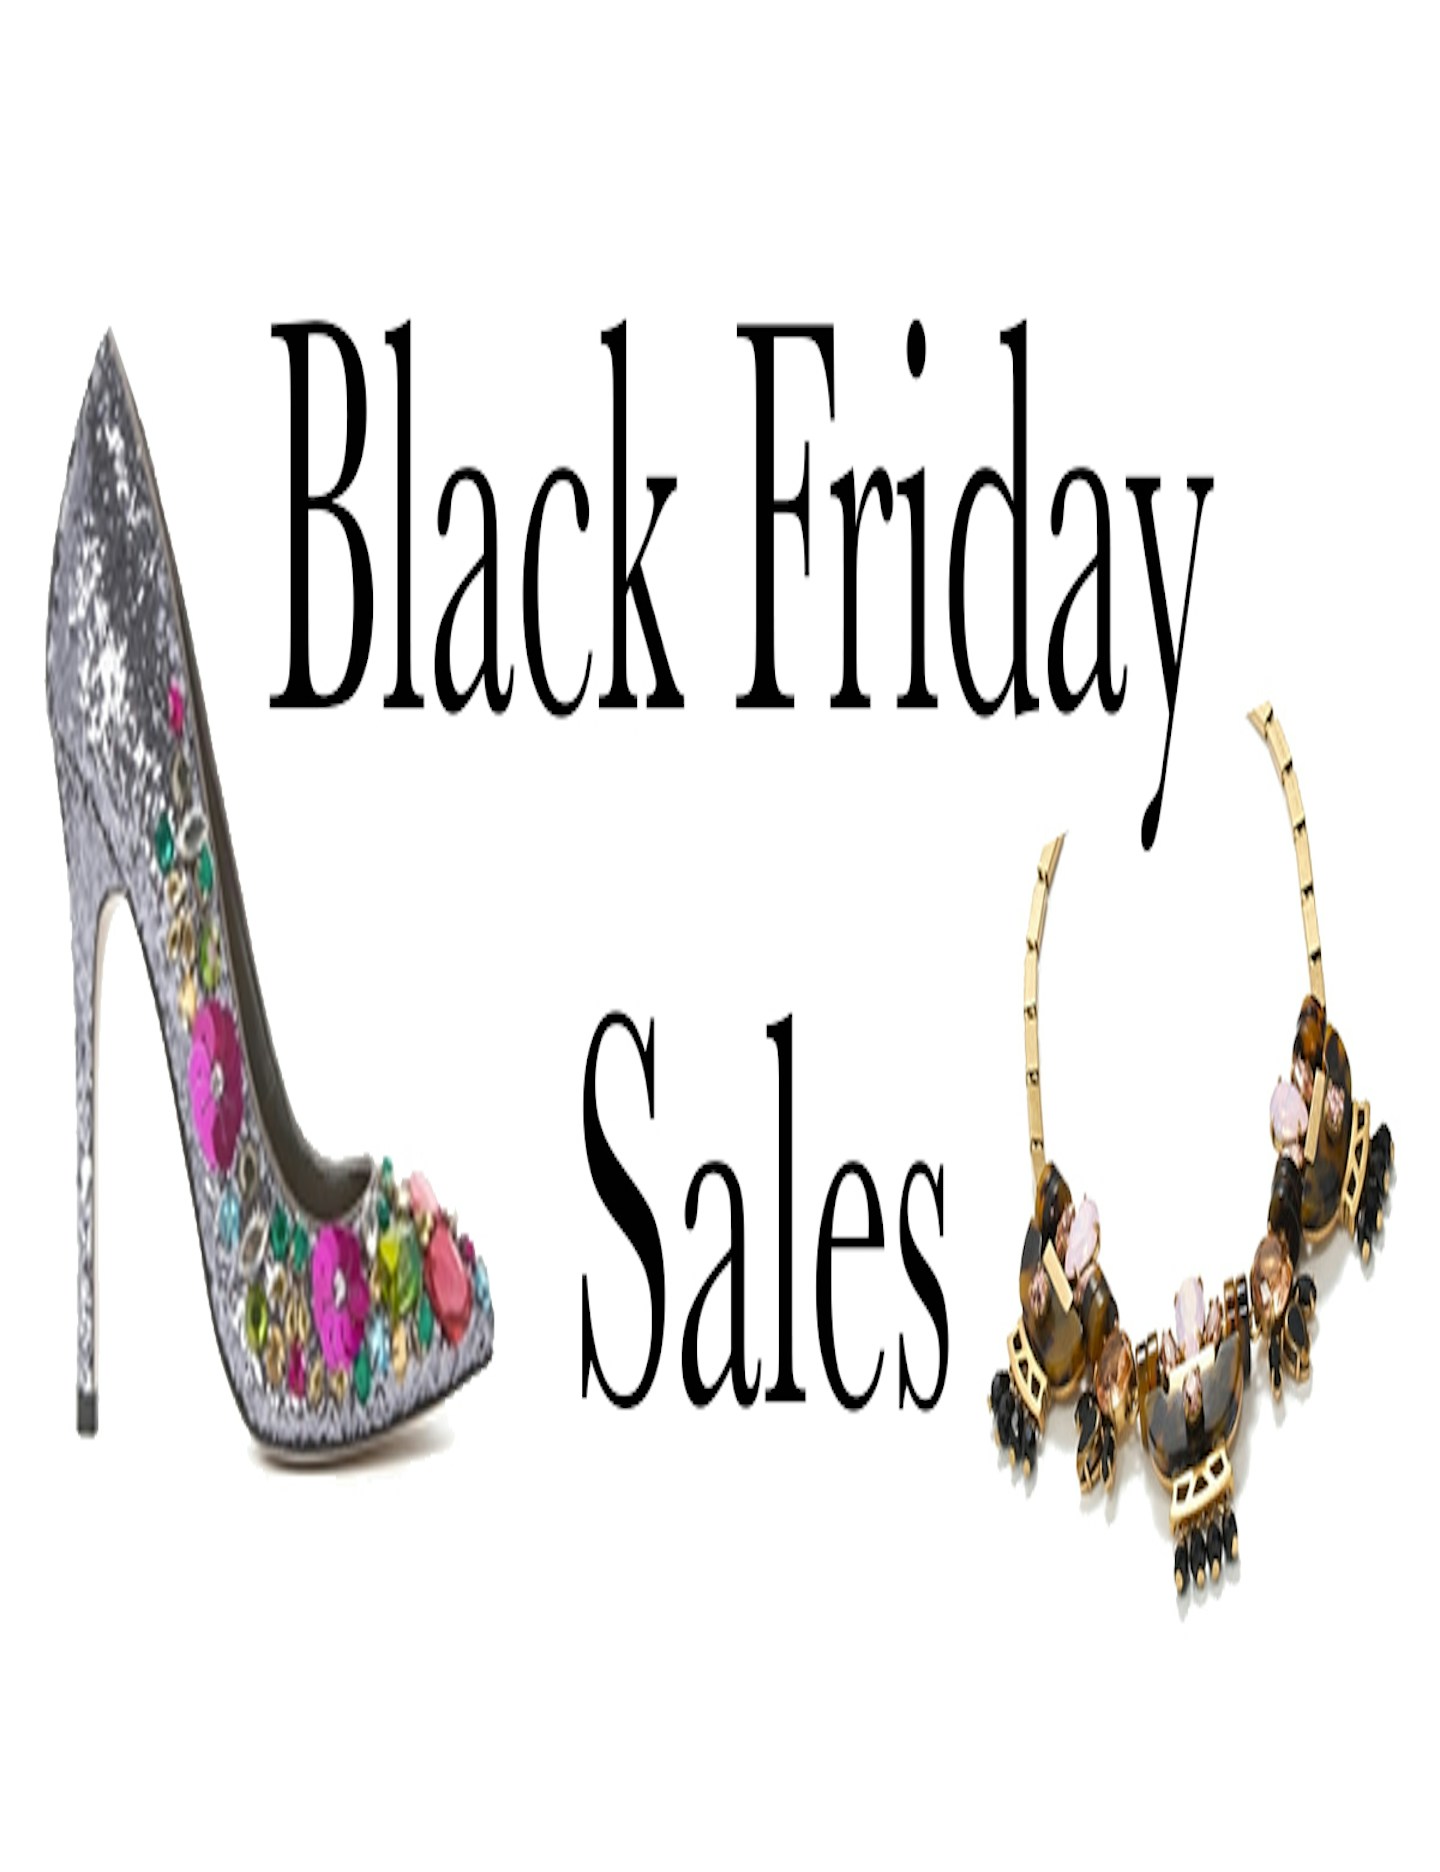 Black Friday 2016 Sales